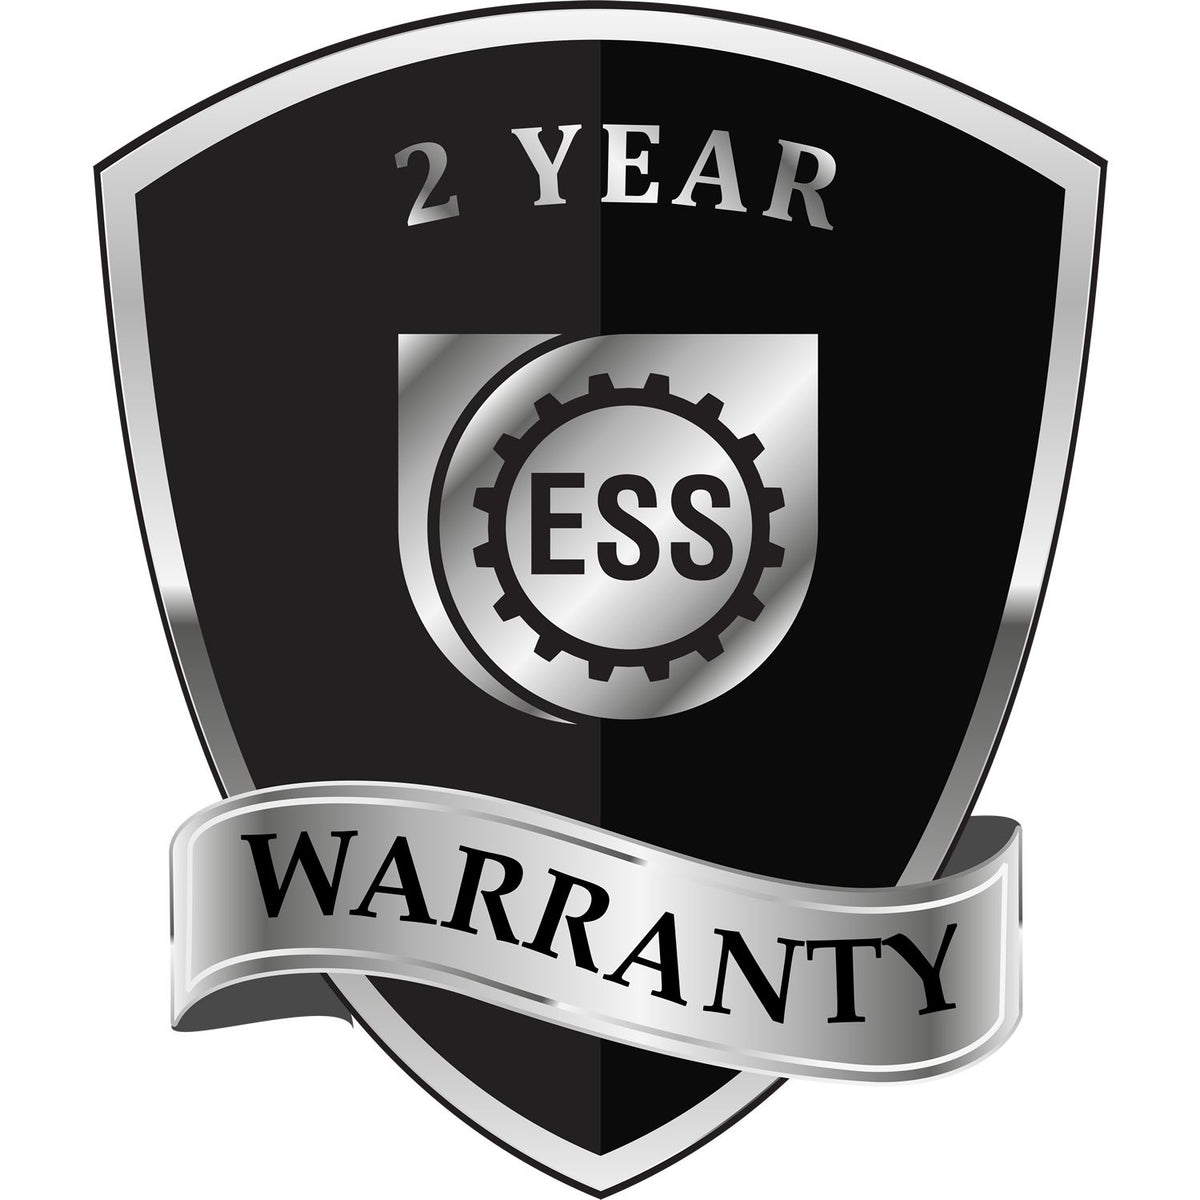 A black and silver badge or emblem showing warranty information for the Hybrid Nevada Land Surveyor Seal